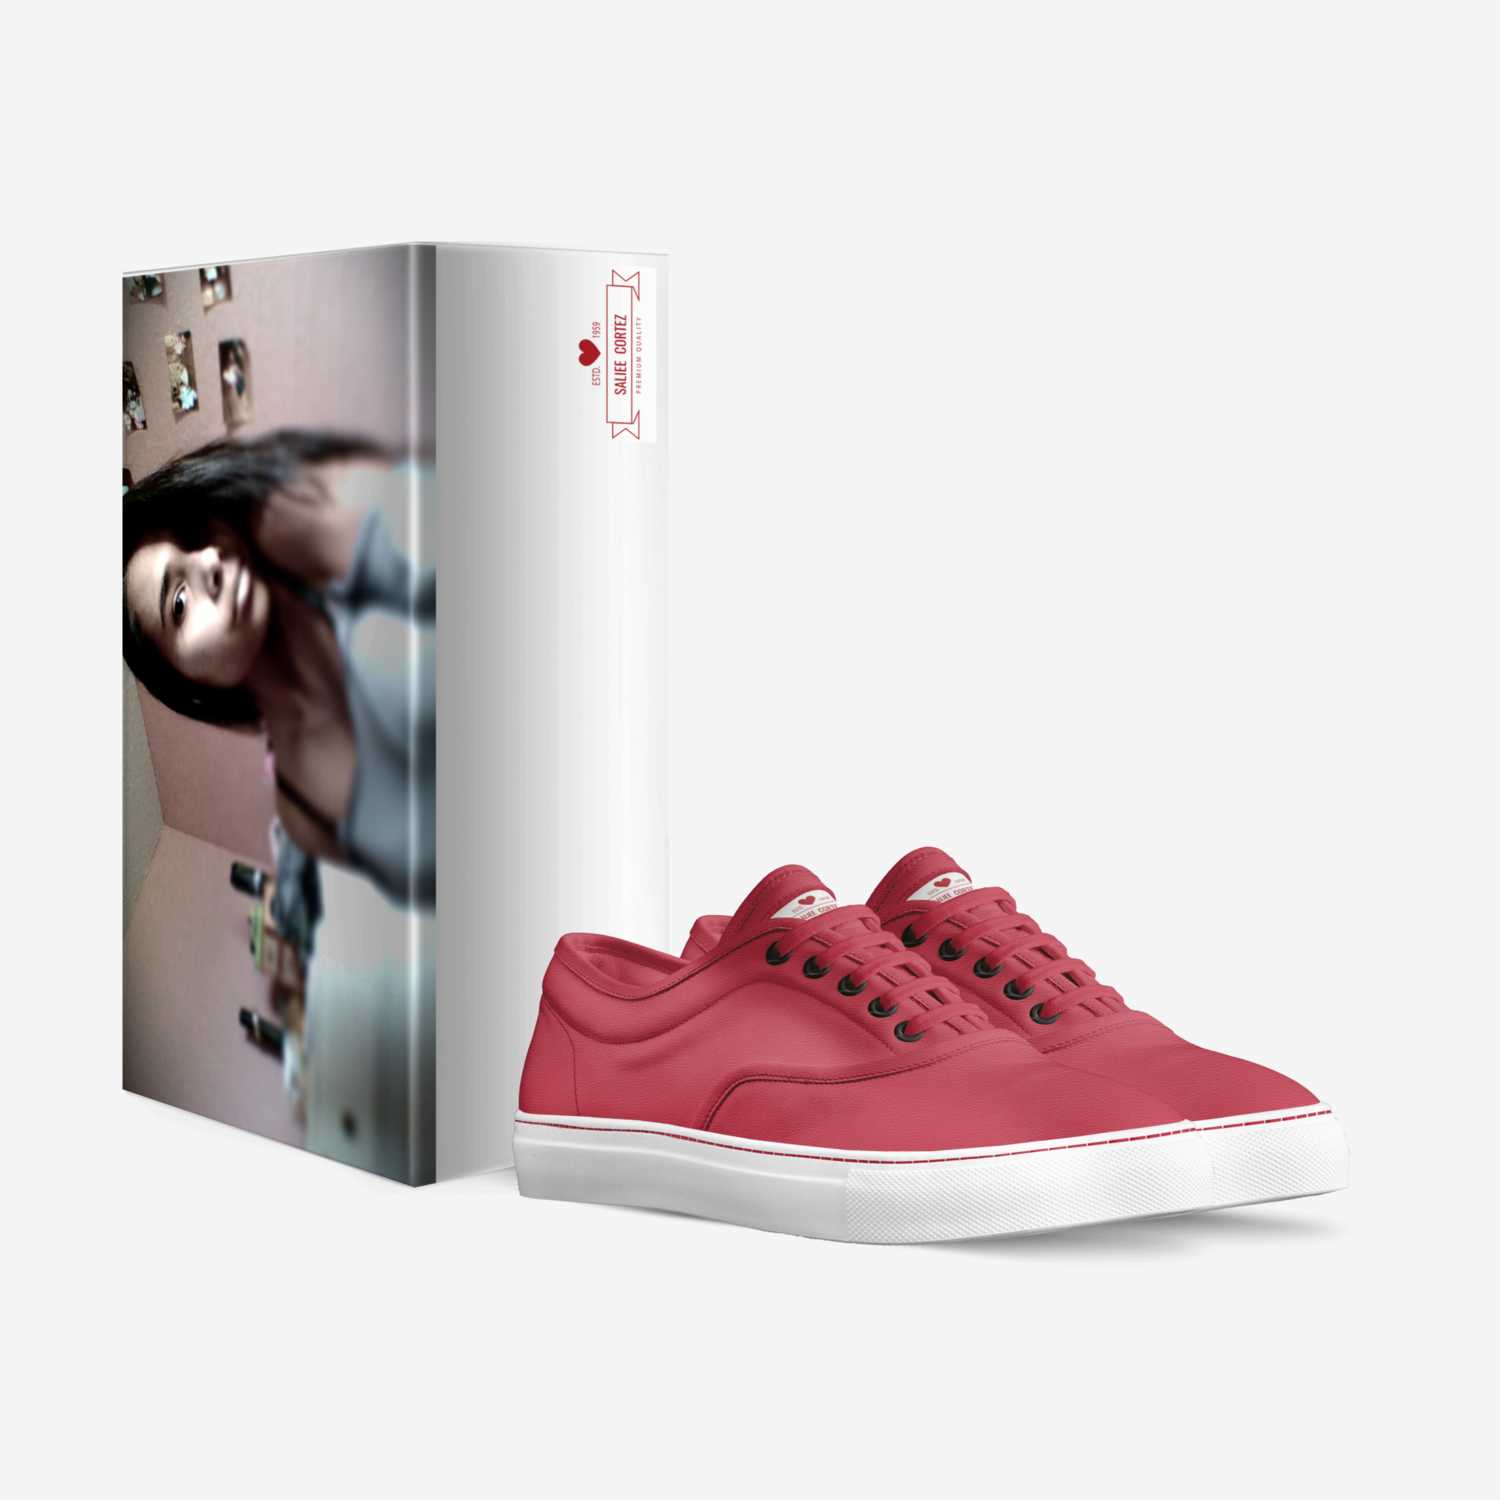 saliee nice kicks custom made in Italy shoes by Teresa Cortez | Box view